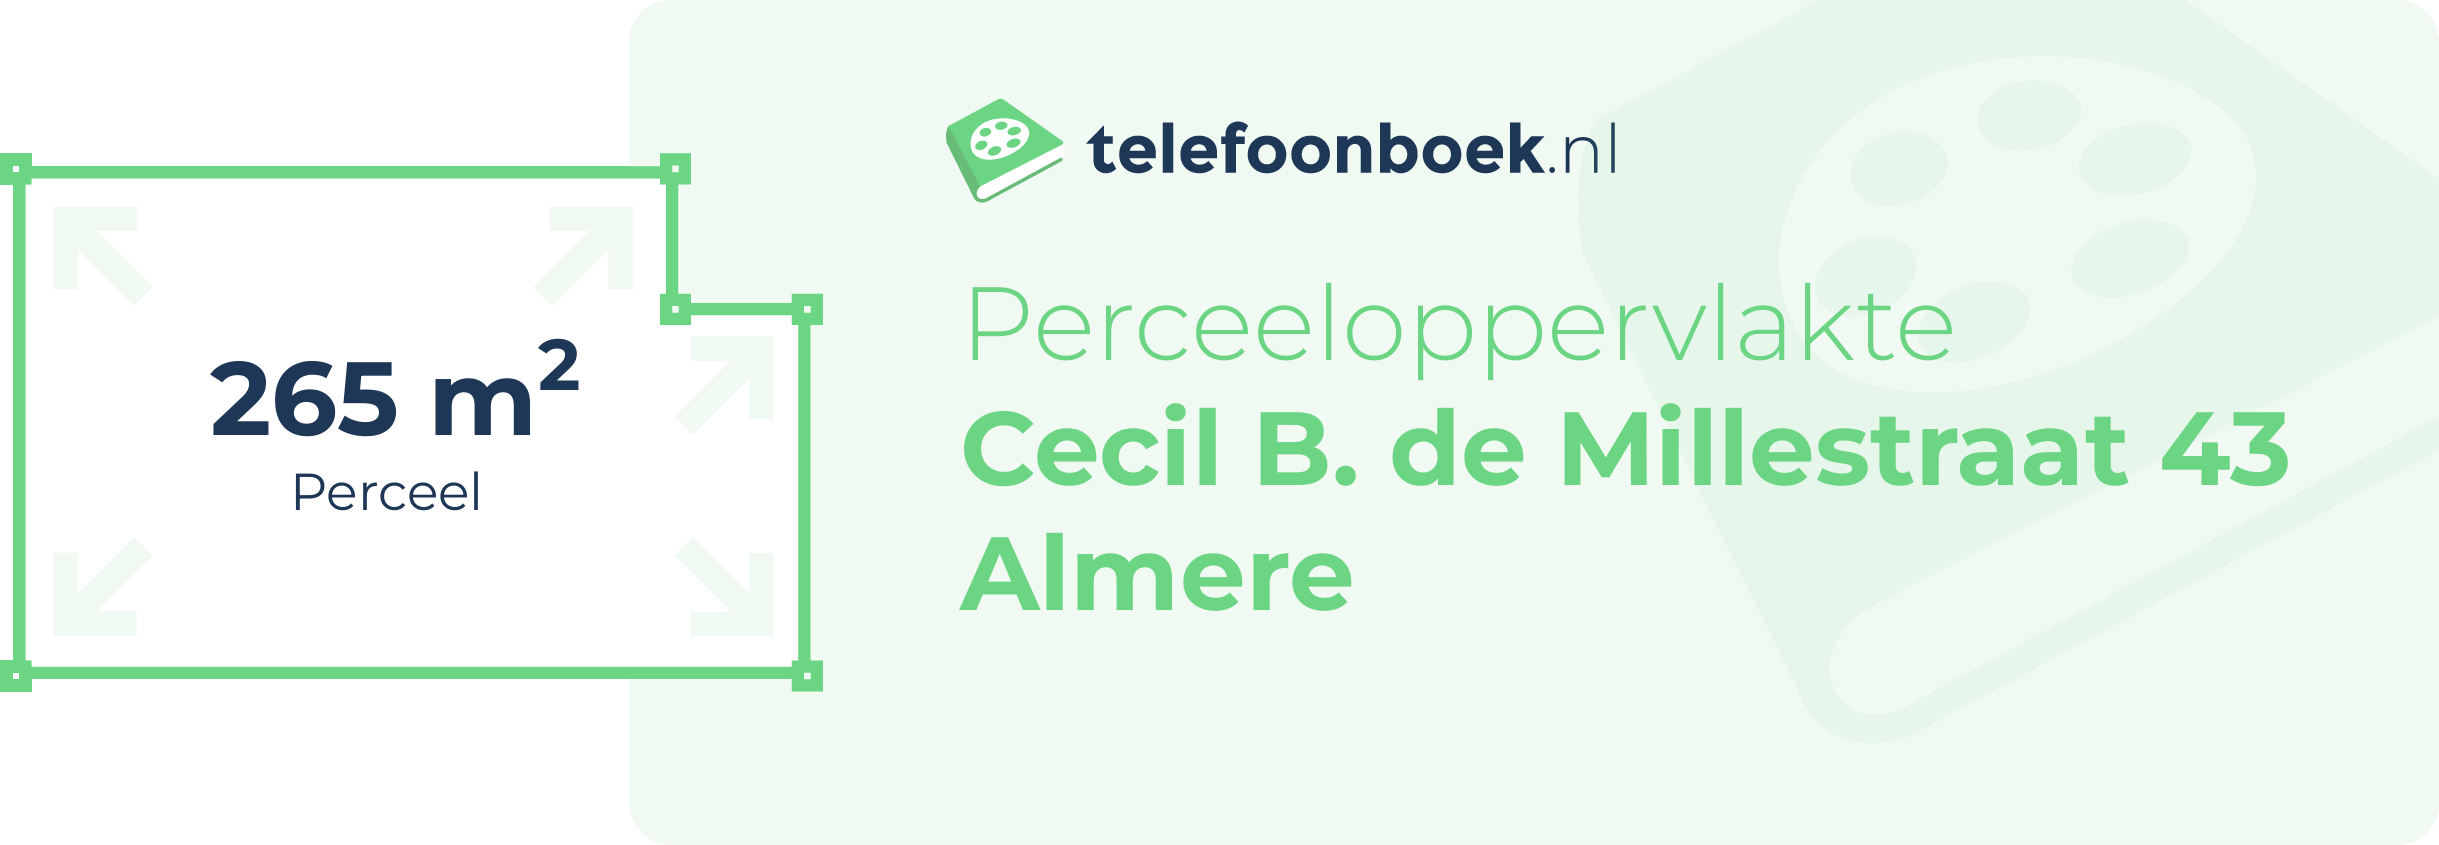 Perceeloppervlakte Cecil B. De Millestraat 43 Almere